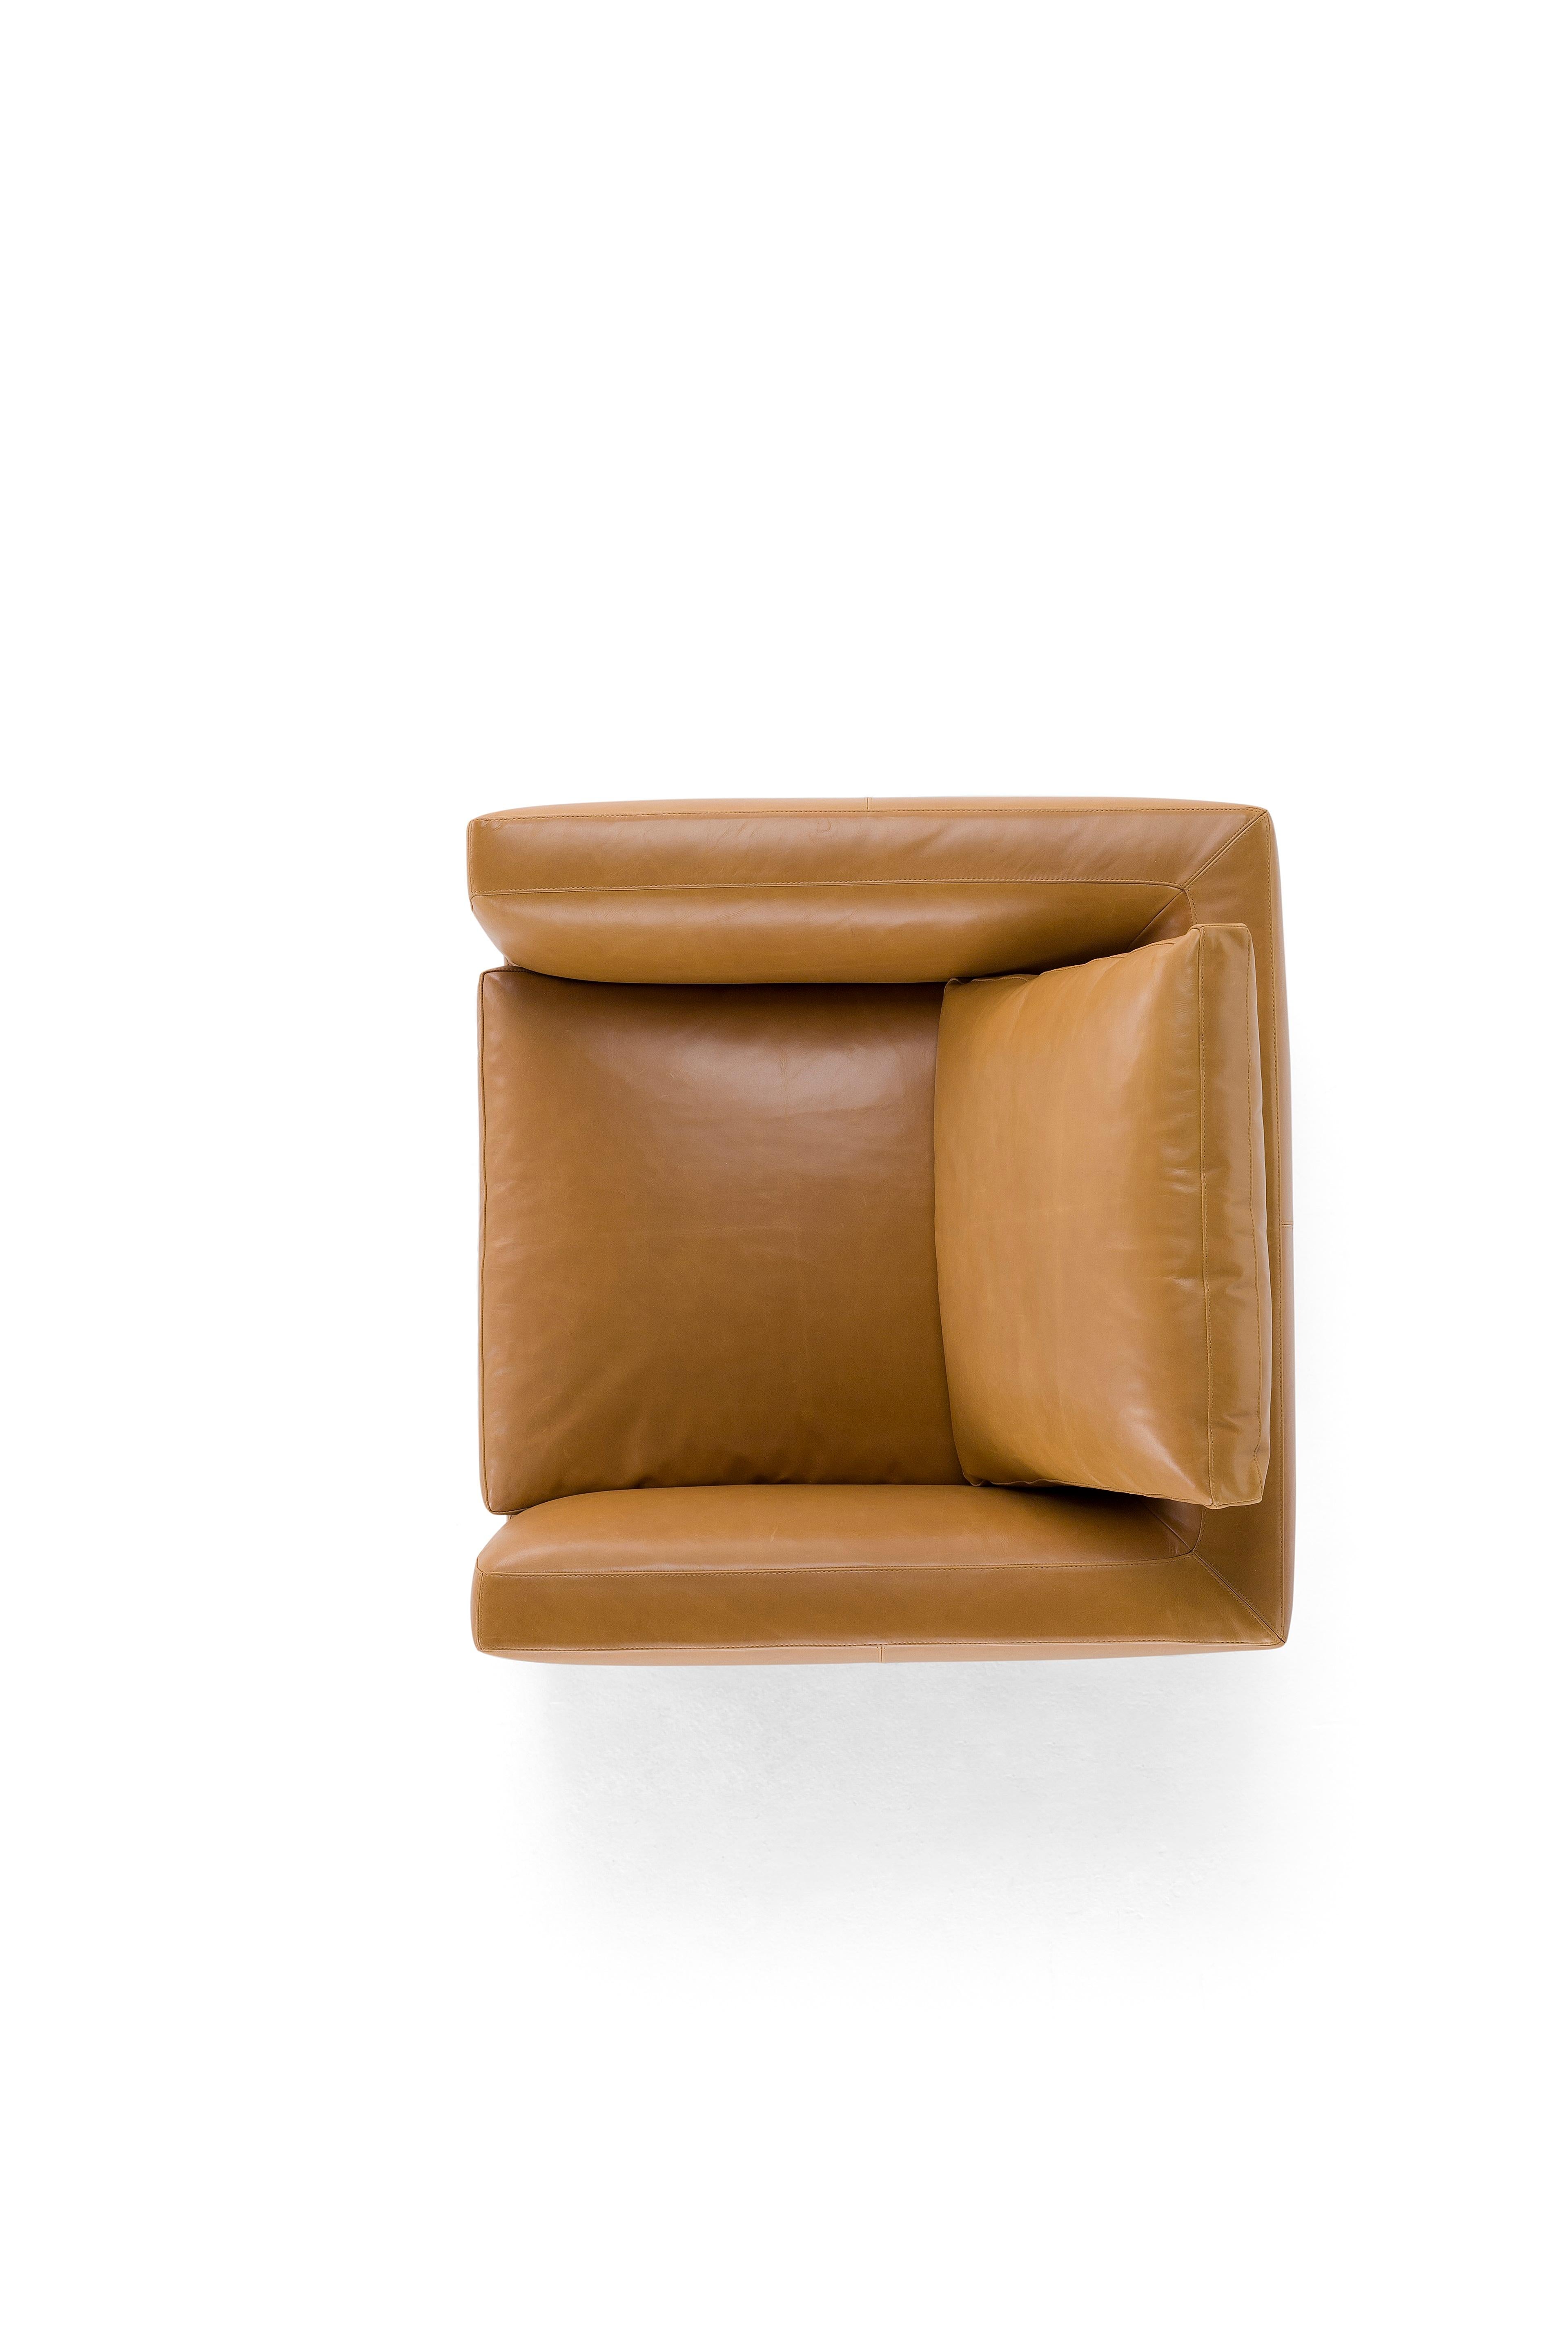 Italian Amura 'Leonard' Armchair in Brown Leather by Emanuel Gargano For Sale